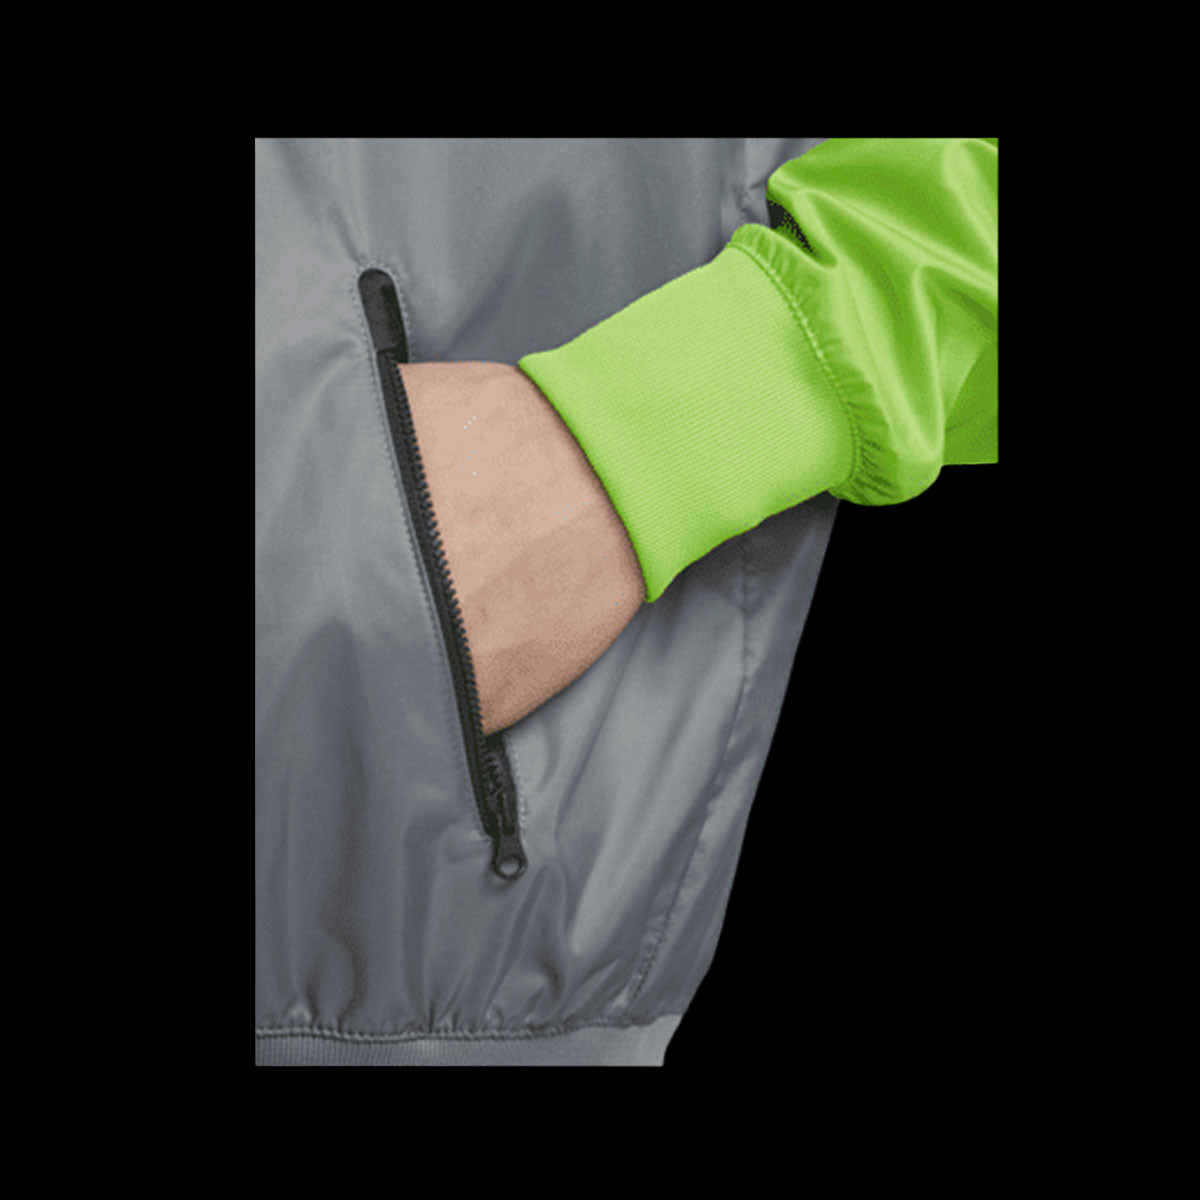 Nike Men's Sportswear Windrunner Full Zip Jacket Cool Grey Action Green